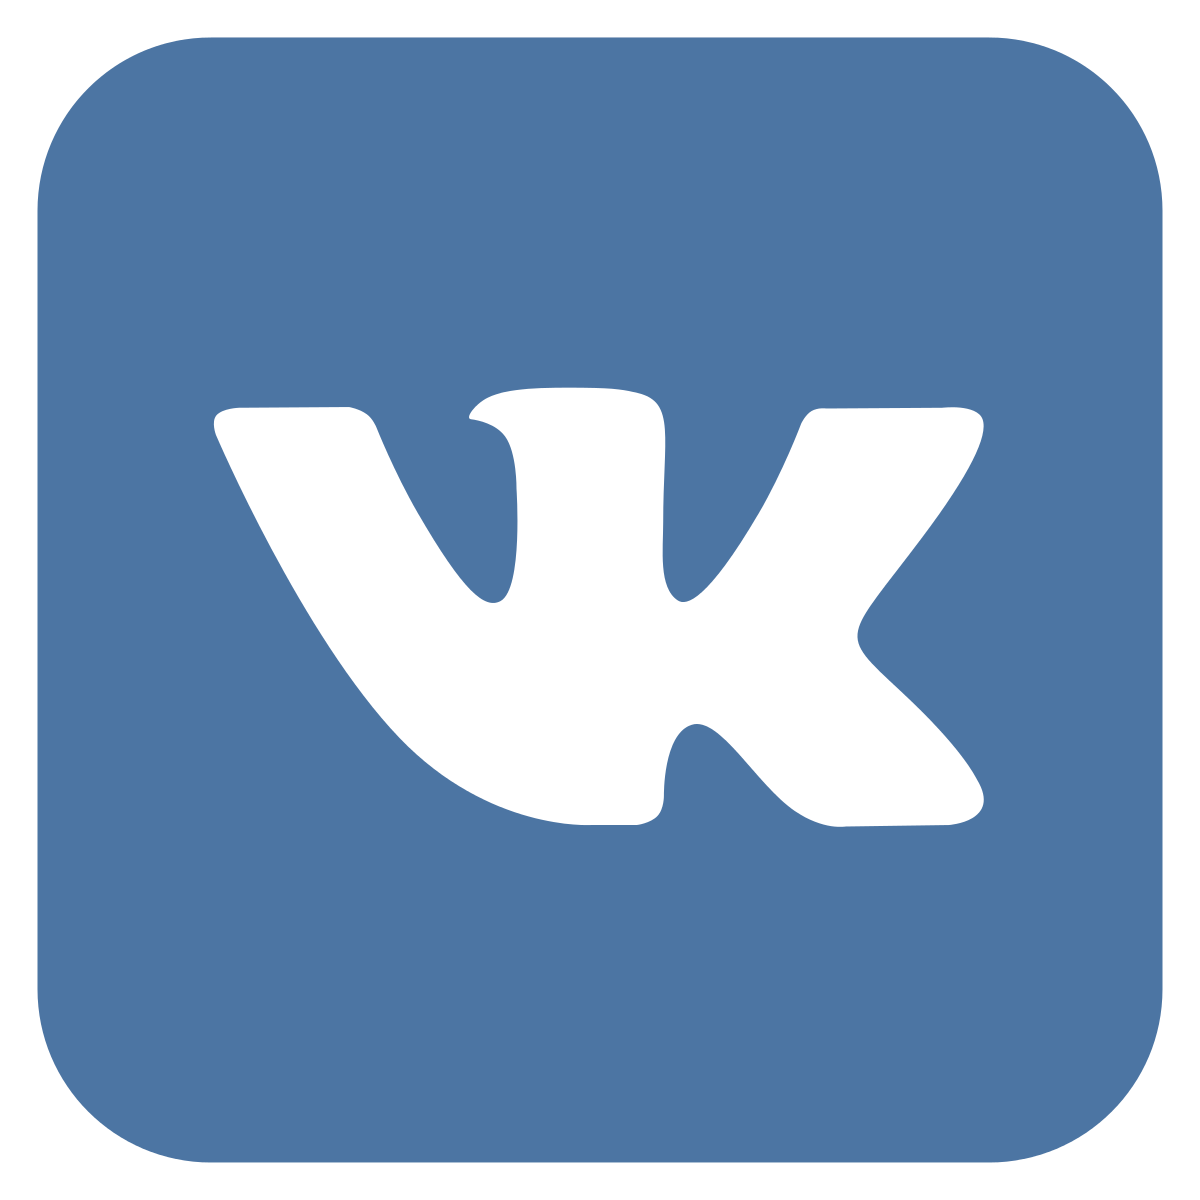 Vk.com страница Володимир